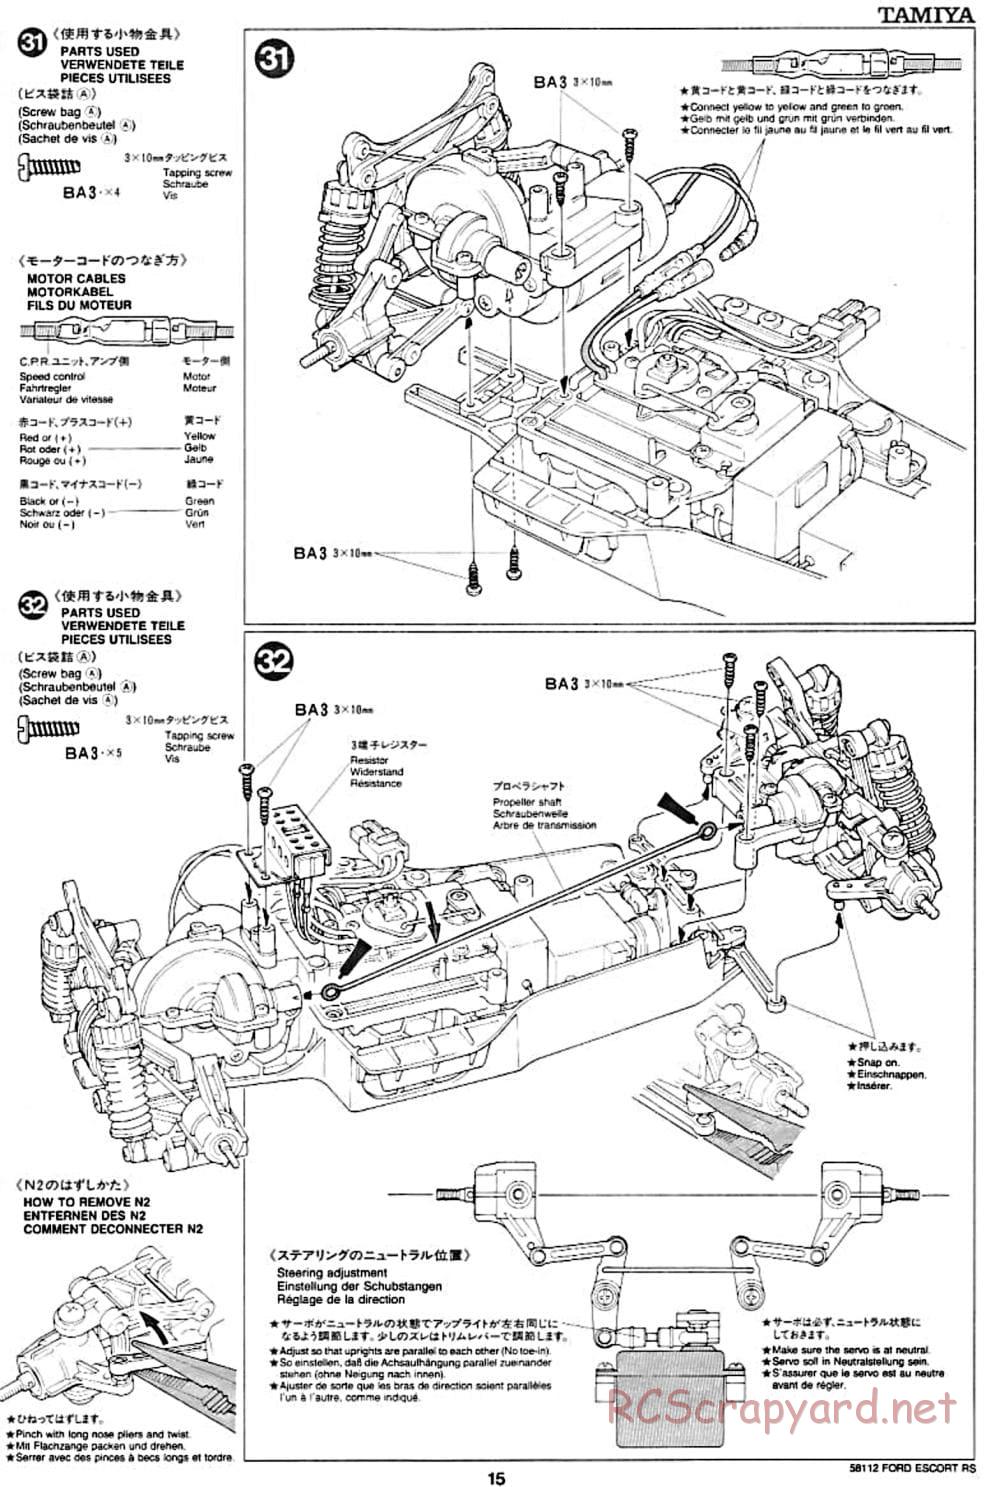 Tamiya - Ford Escort RS Cosworth - TA-01 Chassis - Manual - Page 15